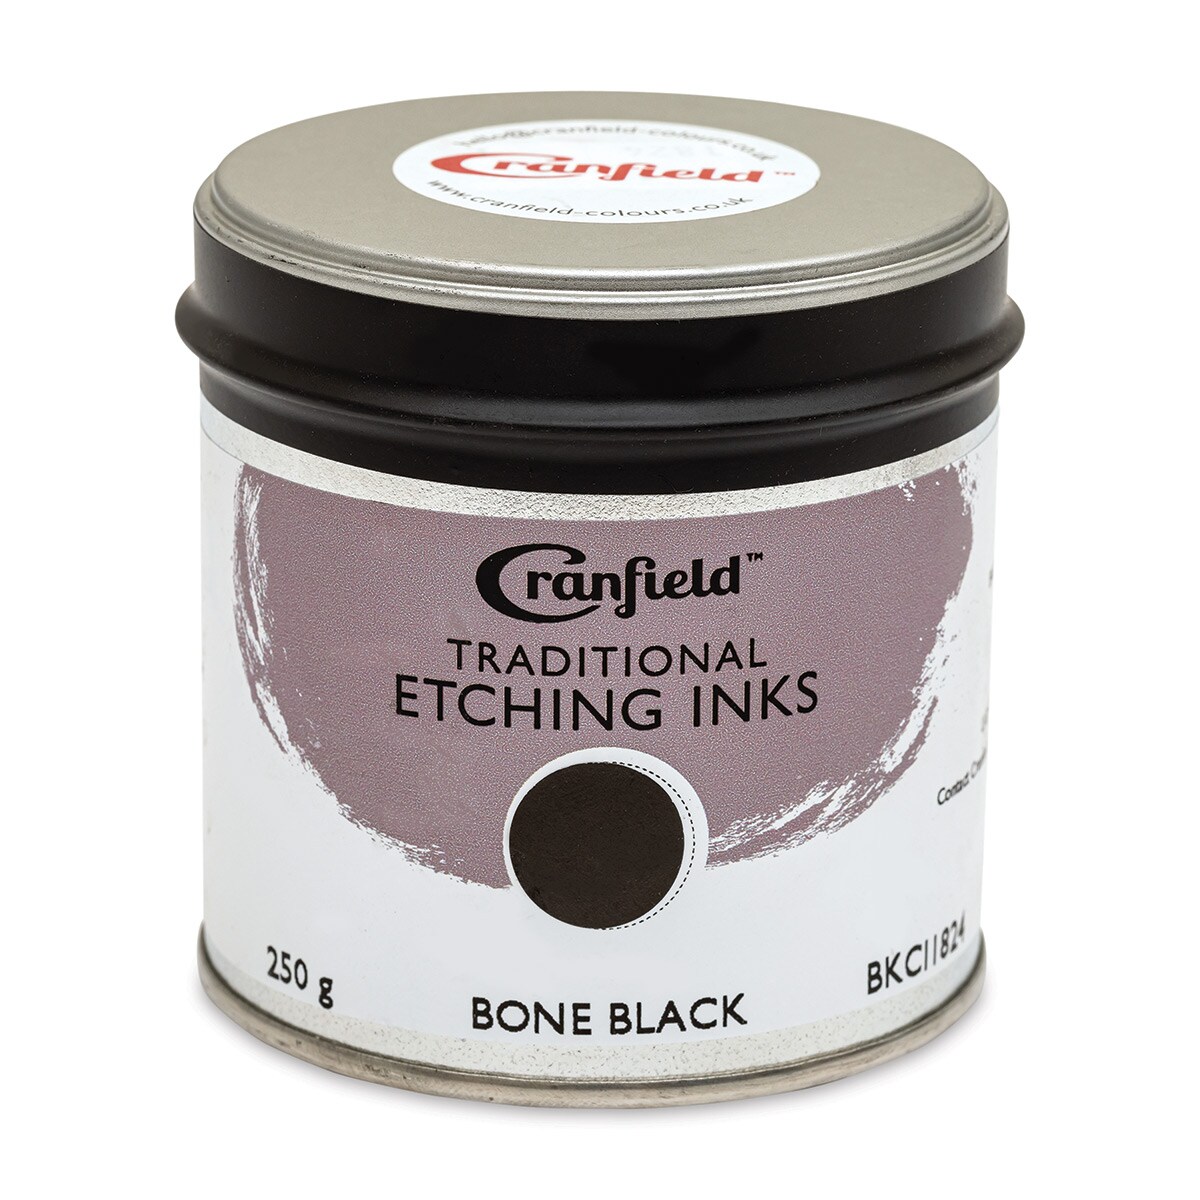 Cranfield Traditional Etching Ink - Bone Black, 250 g